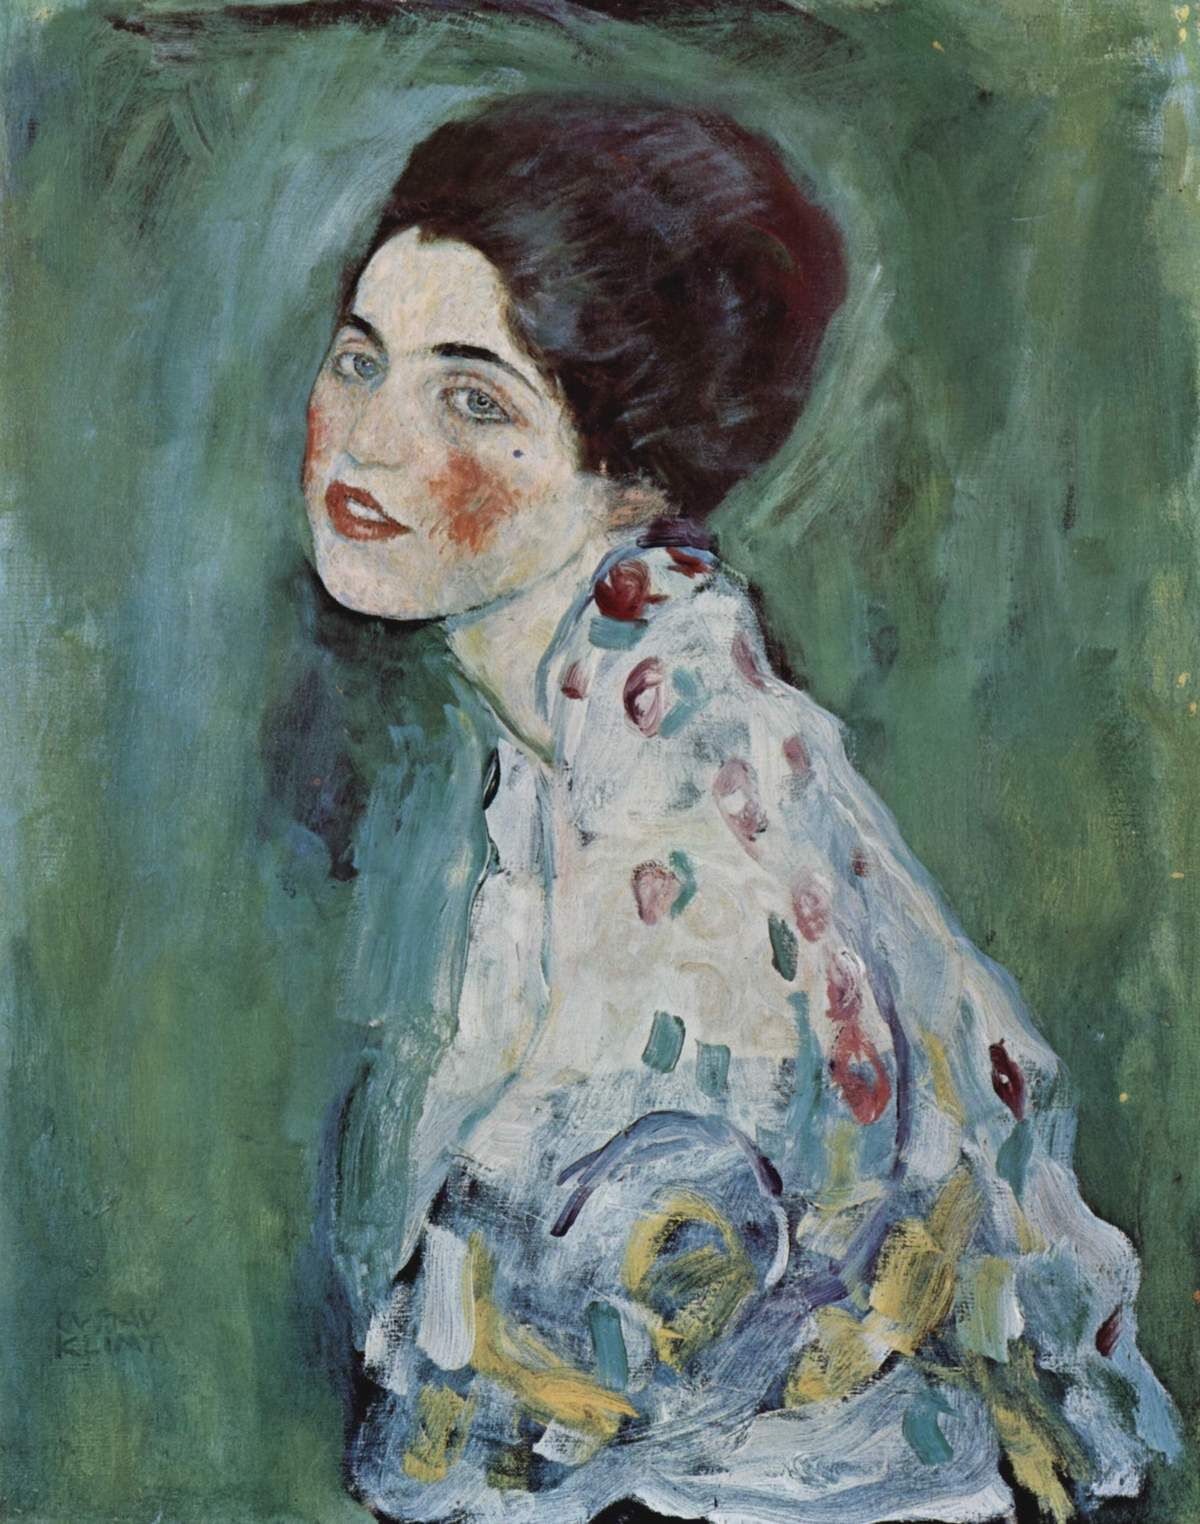 Gustave Klimt, Portrait of a Lady, 1917. Via Wikimedia Commons.